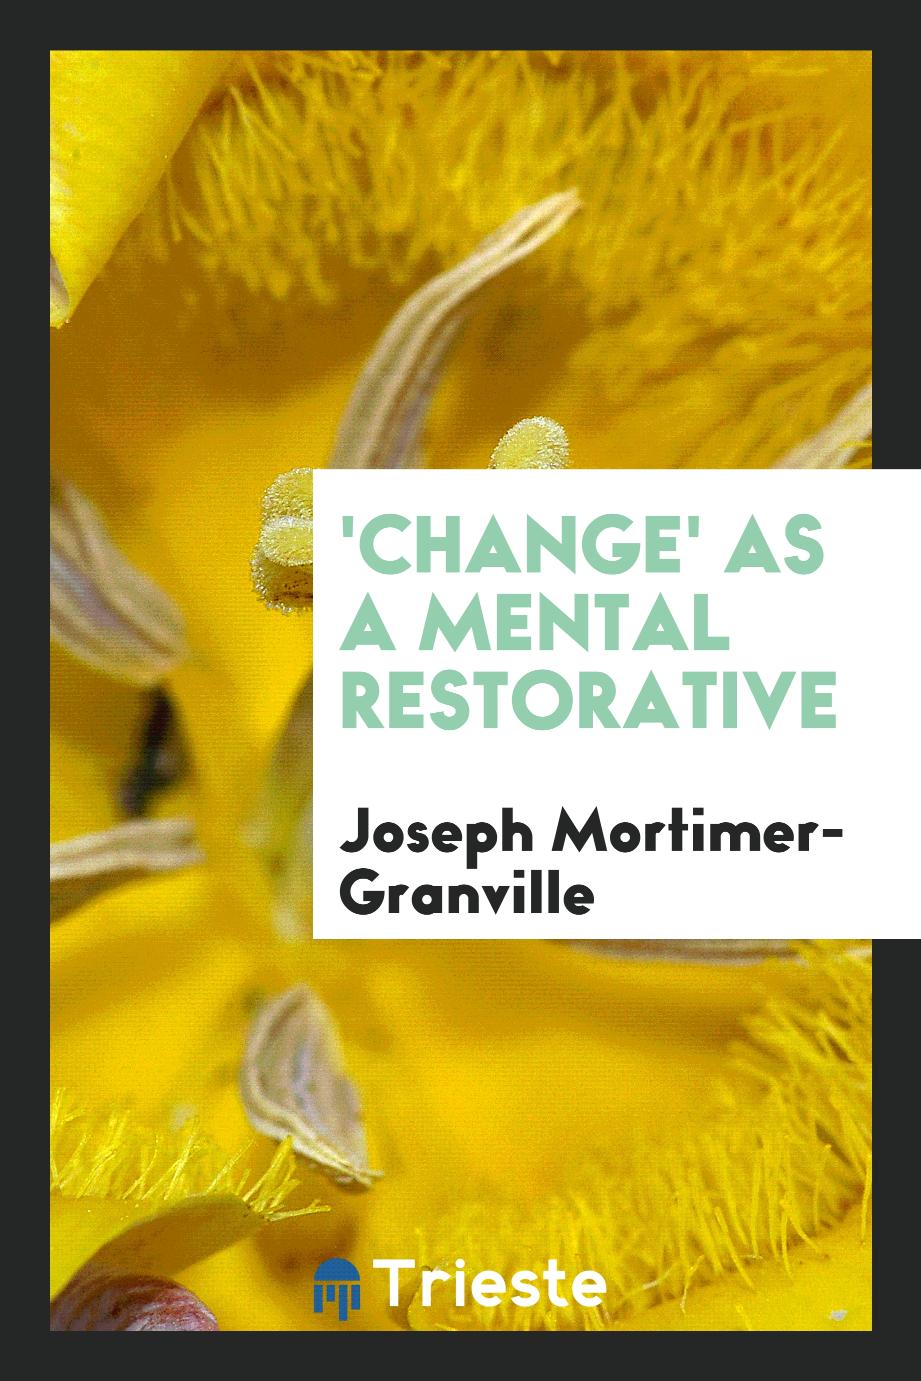 'Change' as a mental restorative